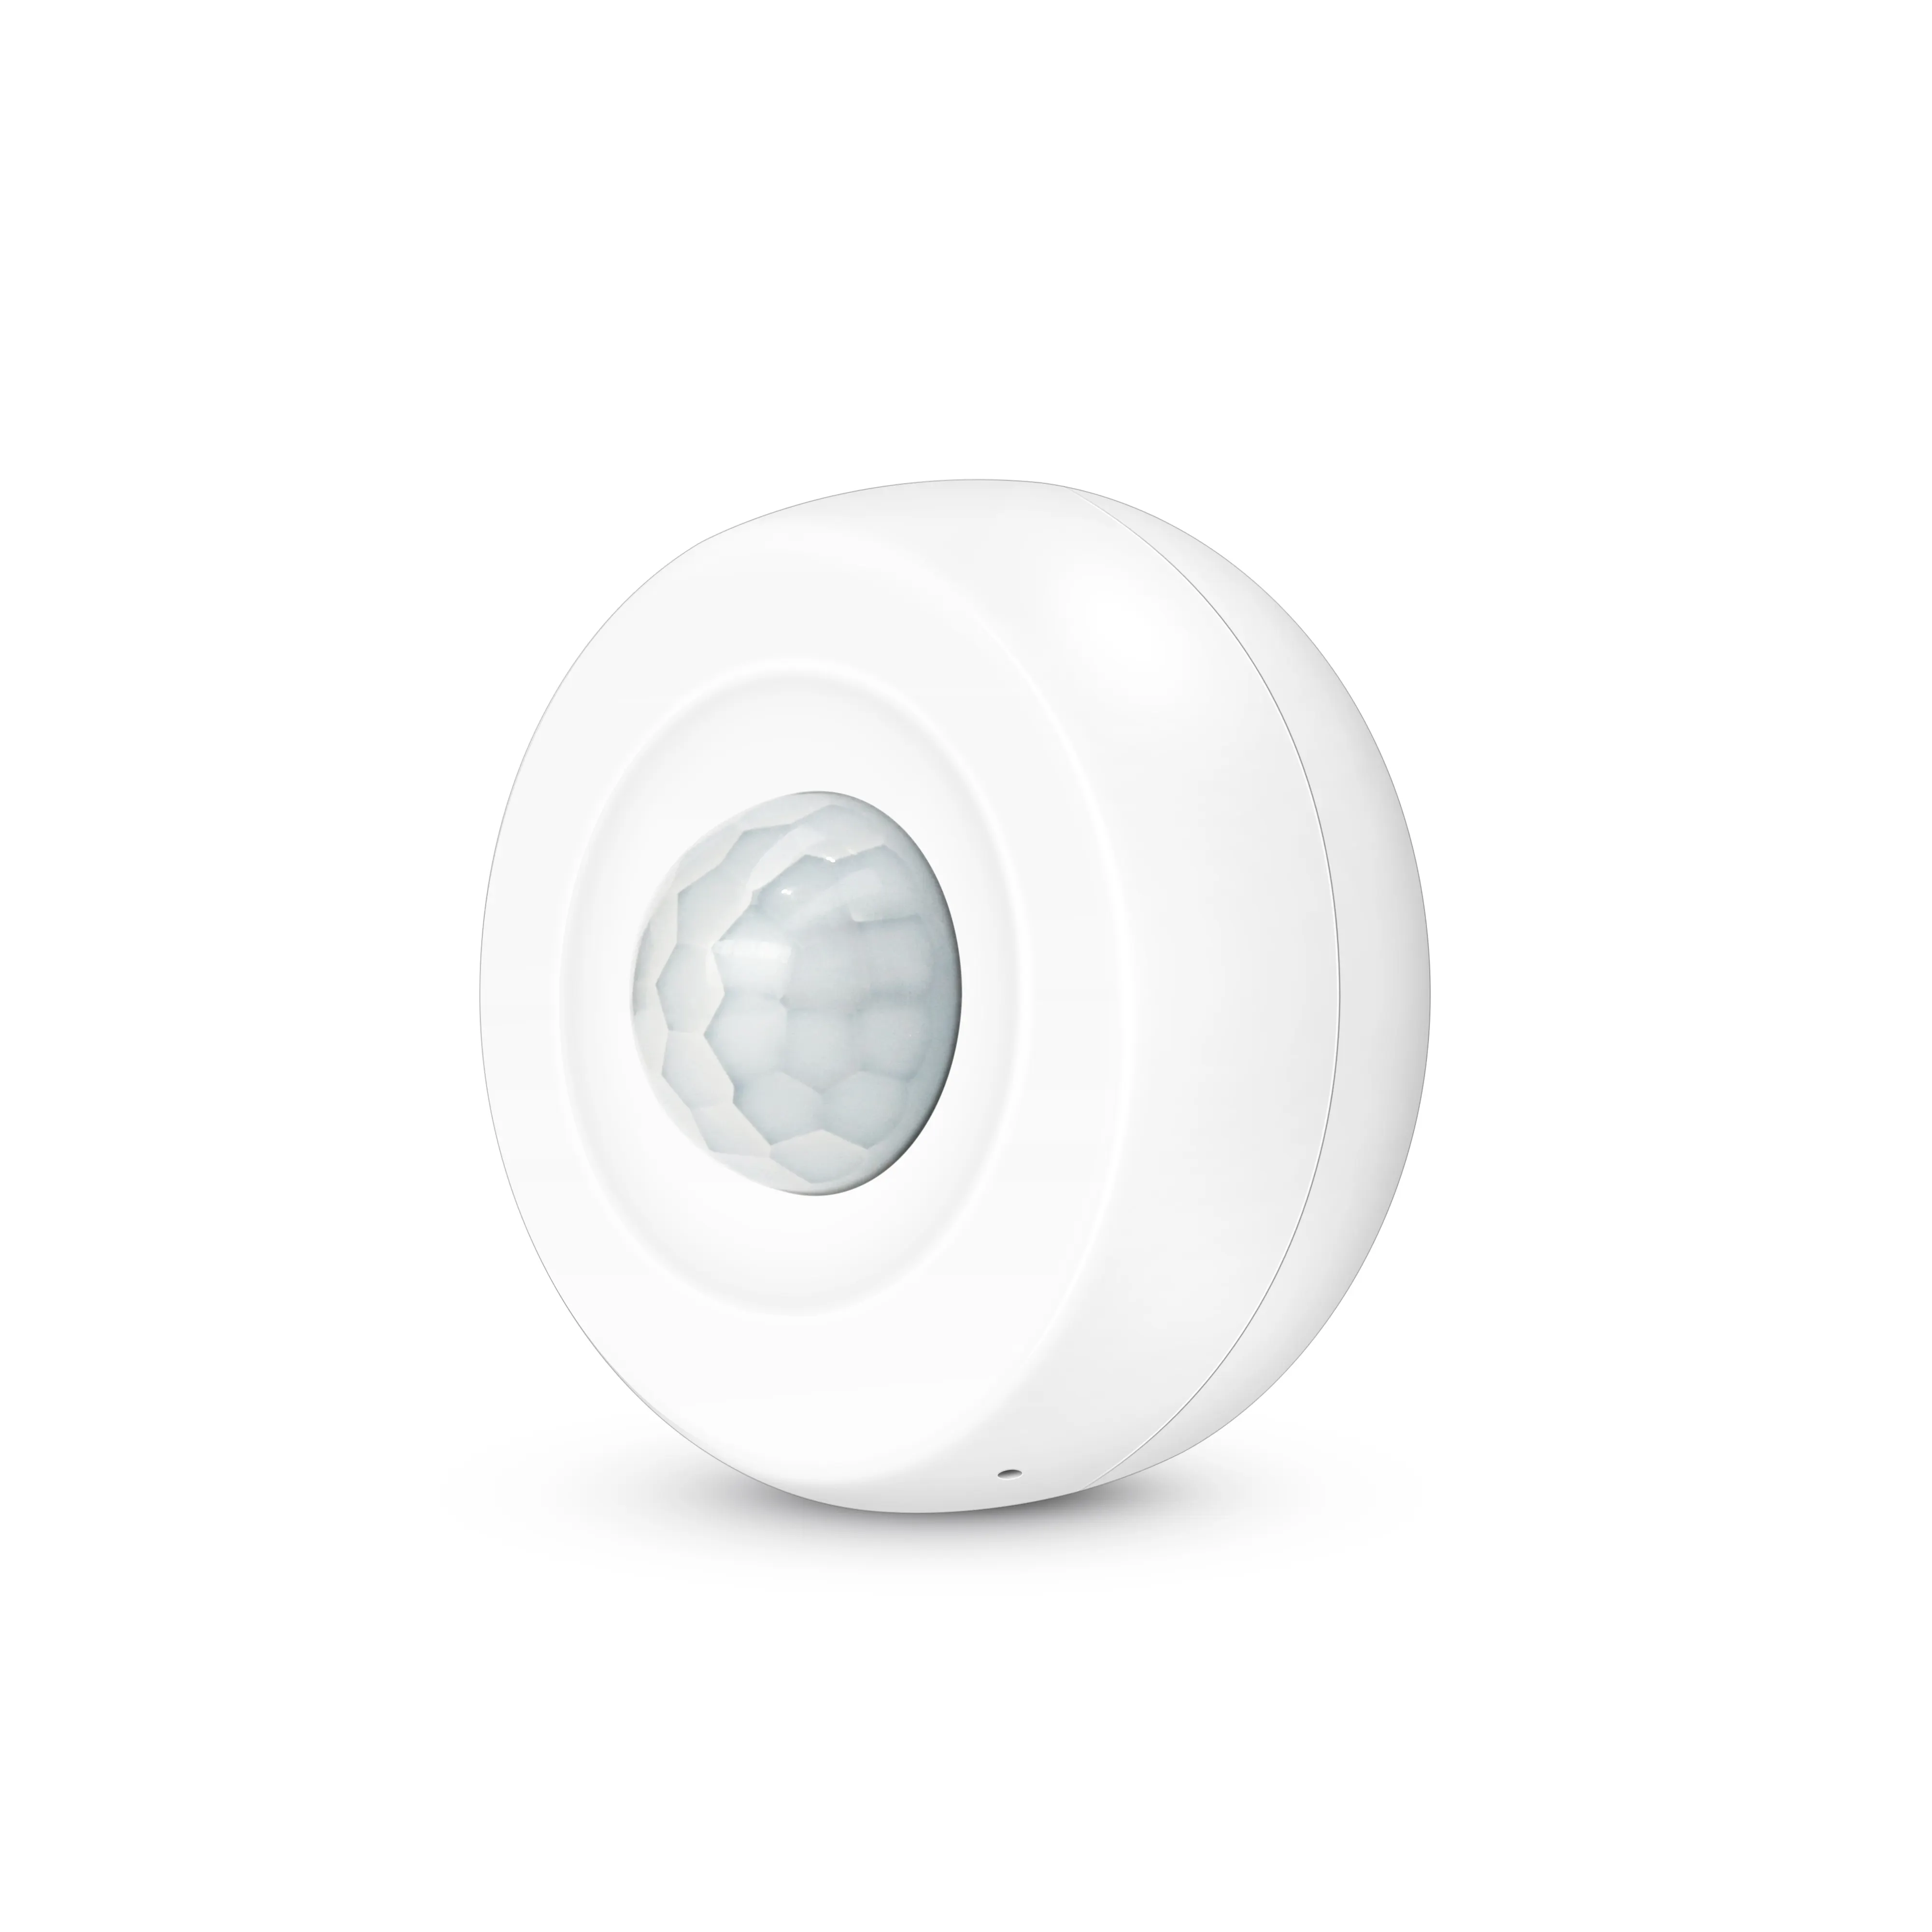 Tuya Infrared PIR motion detector wireless smart movement sensor for home security alarm